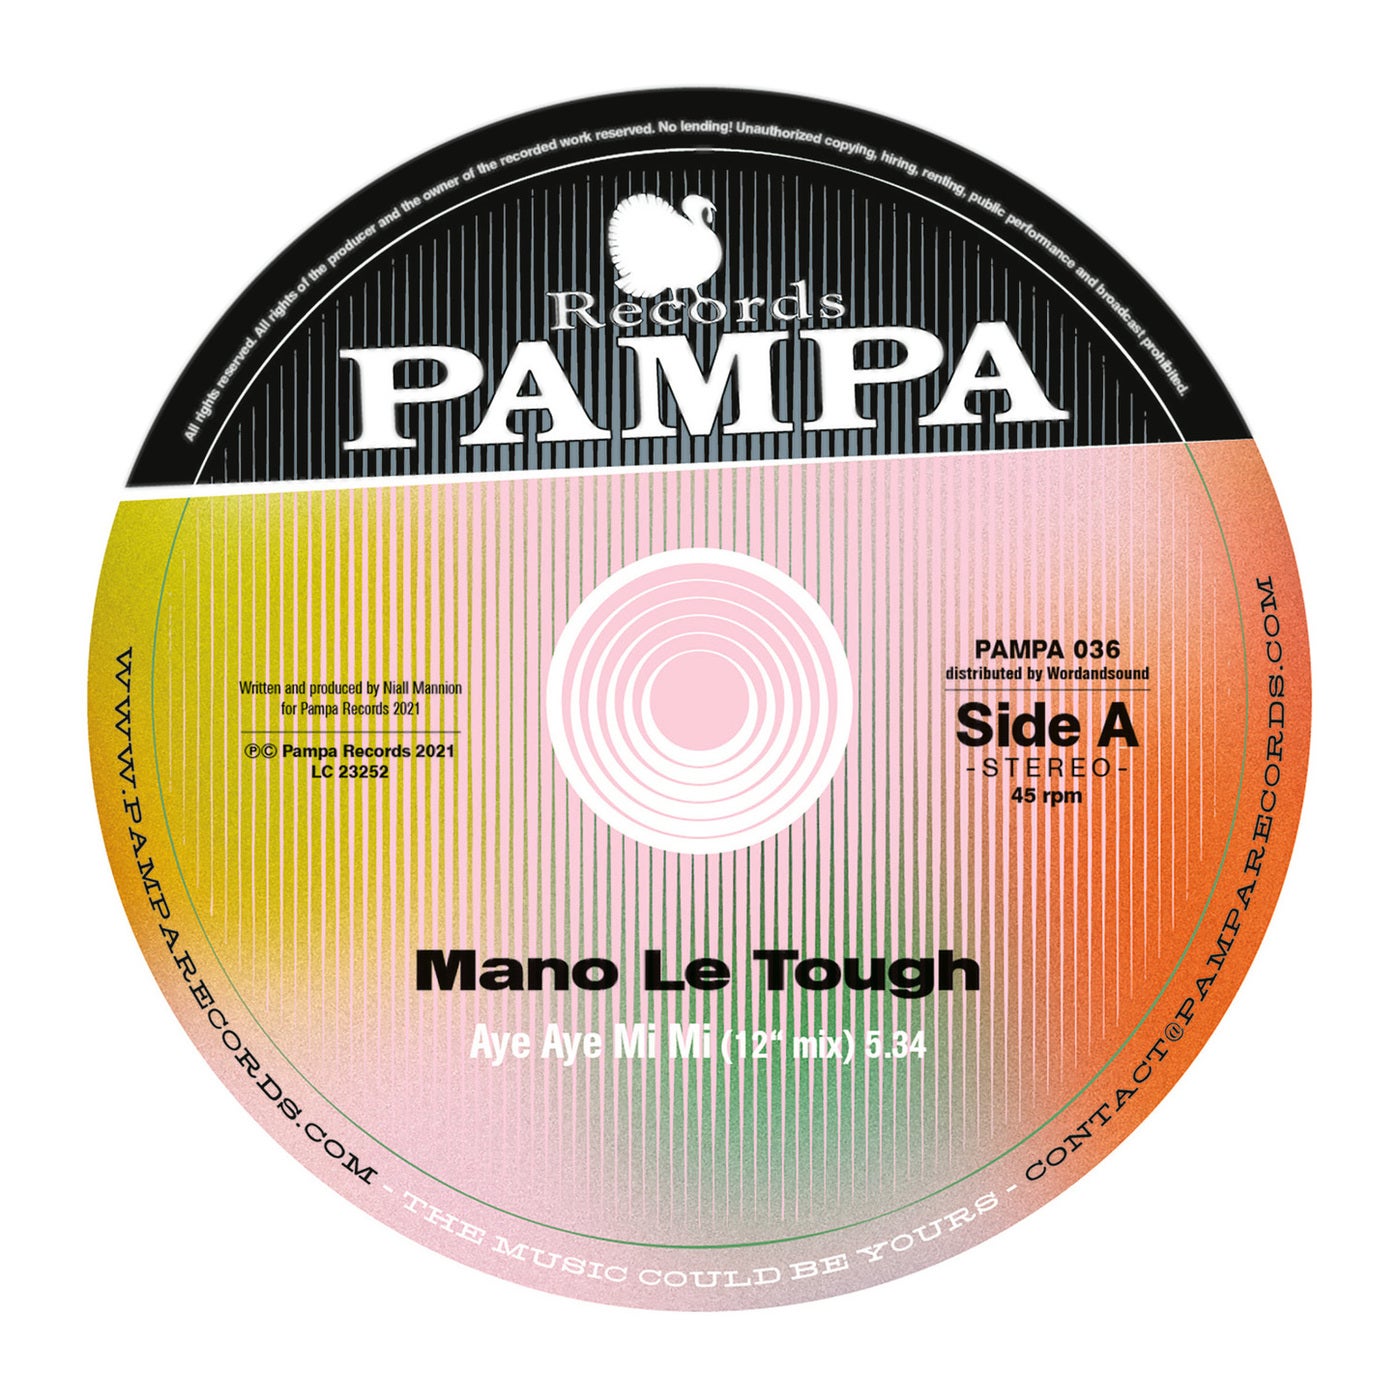 image cover: Mano Le Tough - Aye Aye Mi Mi / PAMPA036